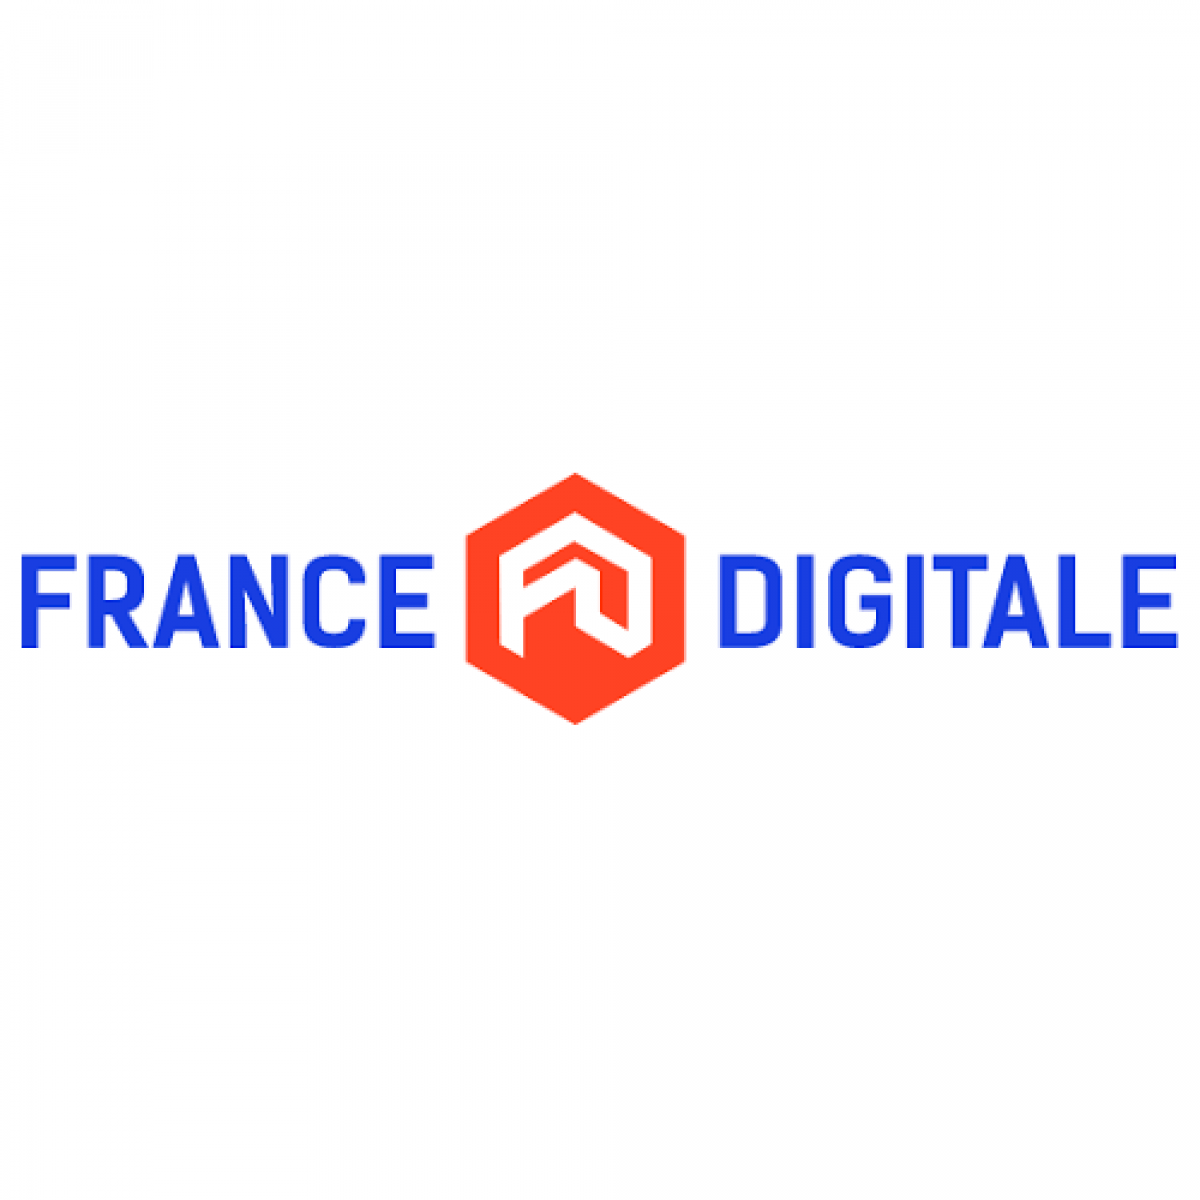 france digitale logo